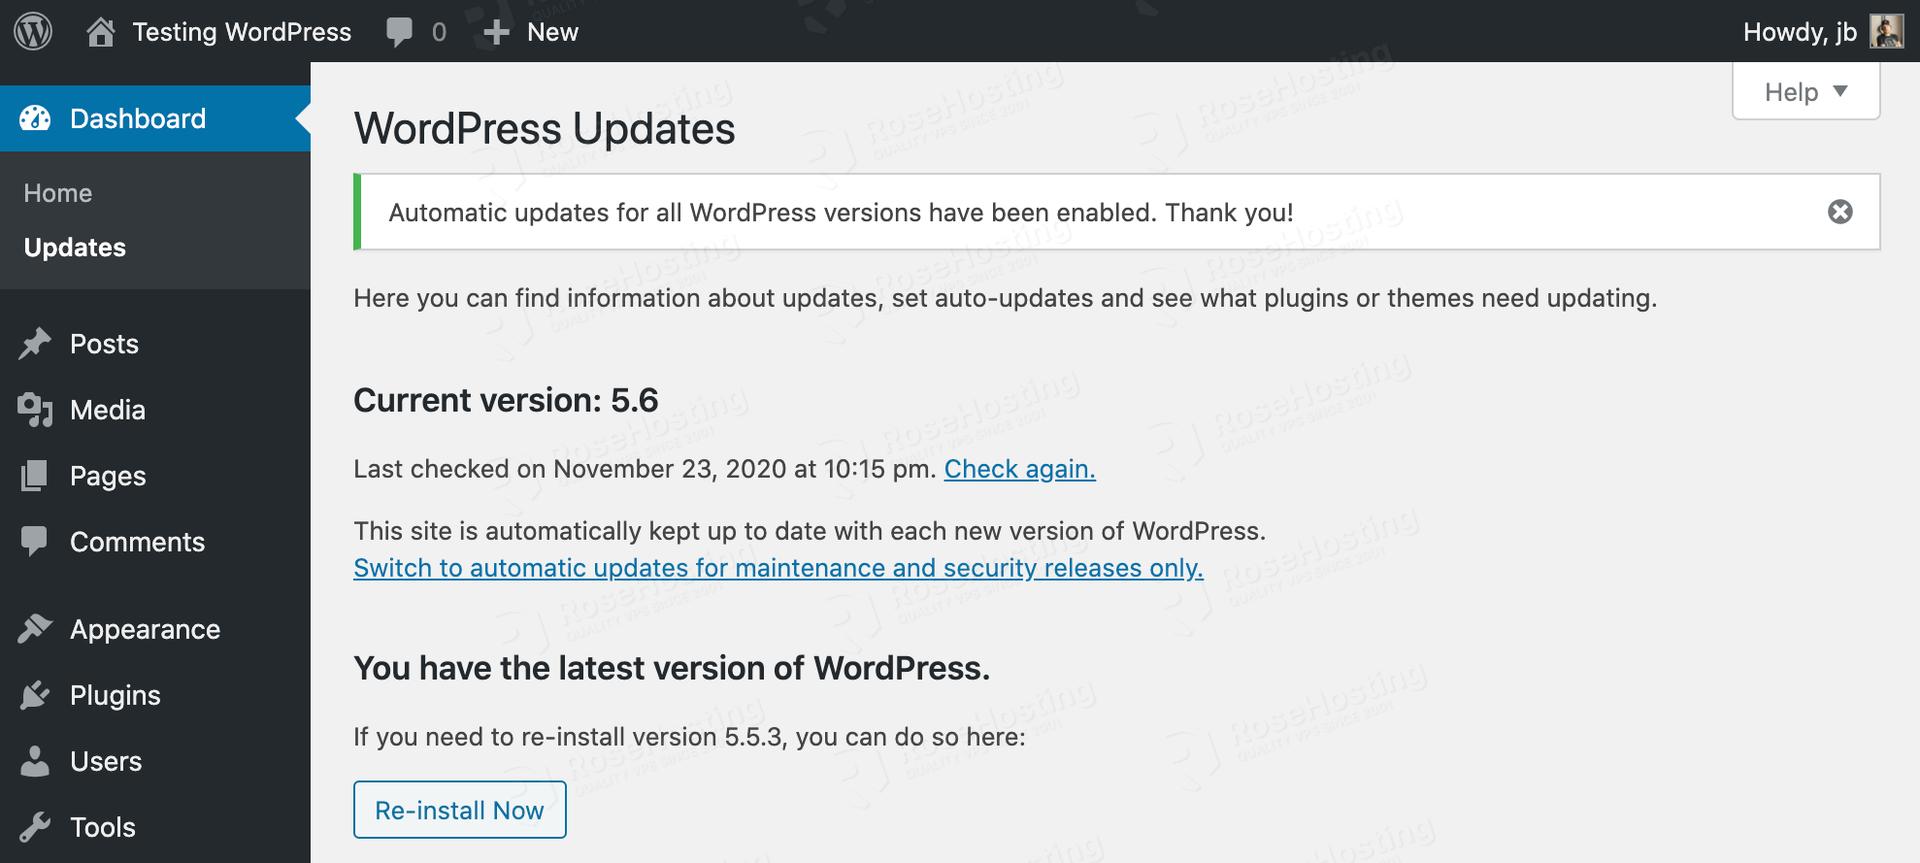 wordpress updates